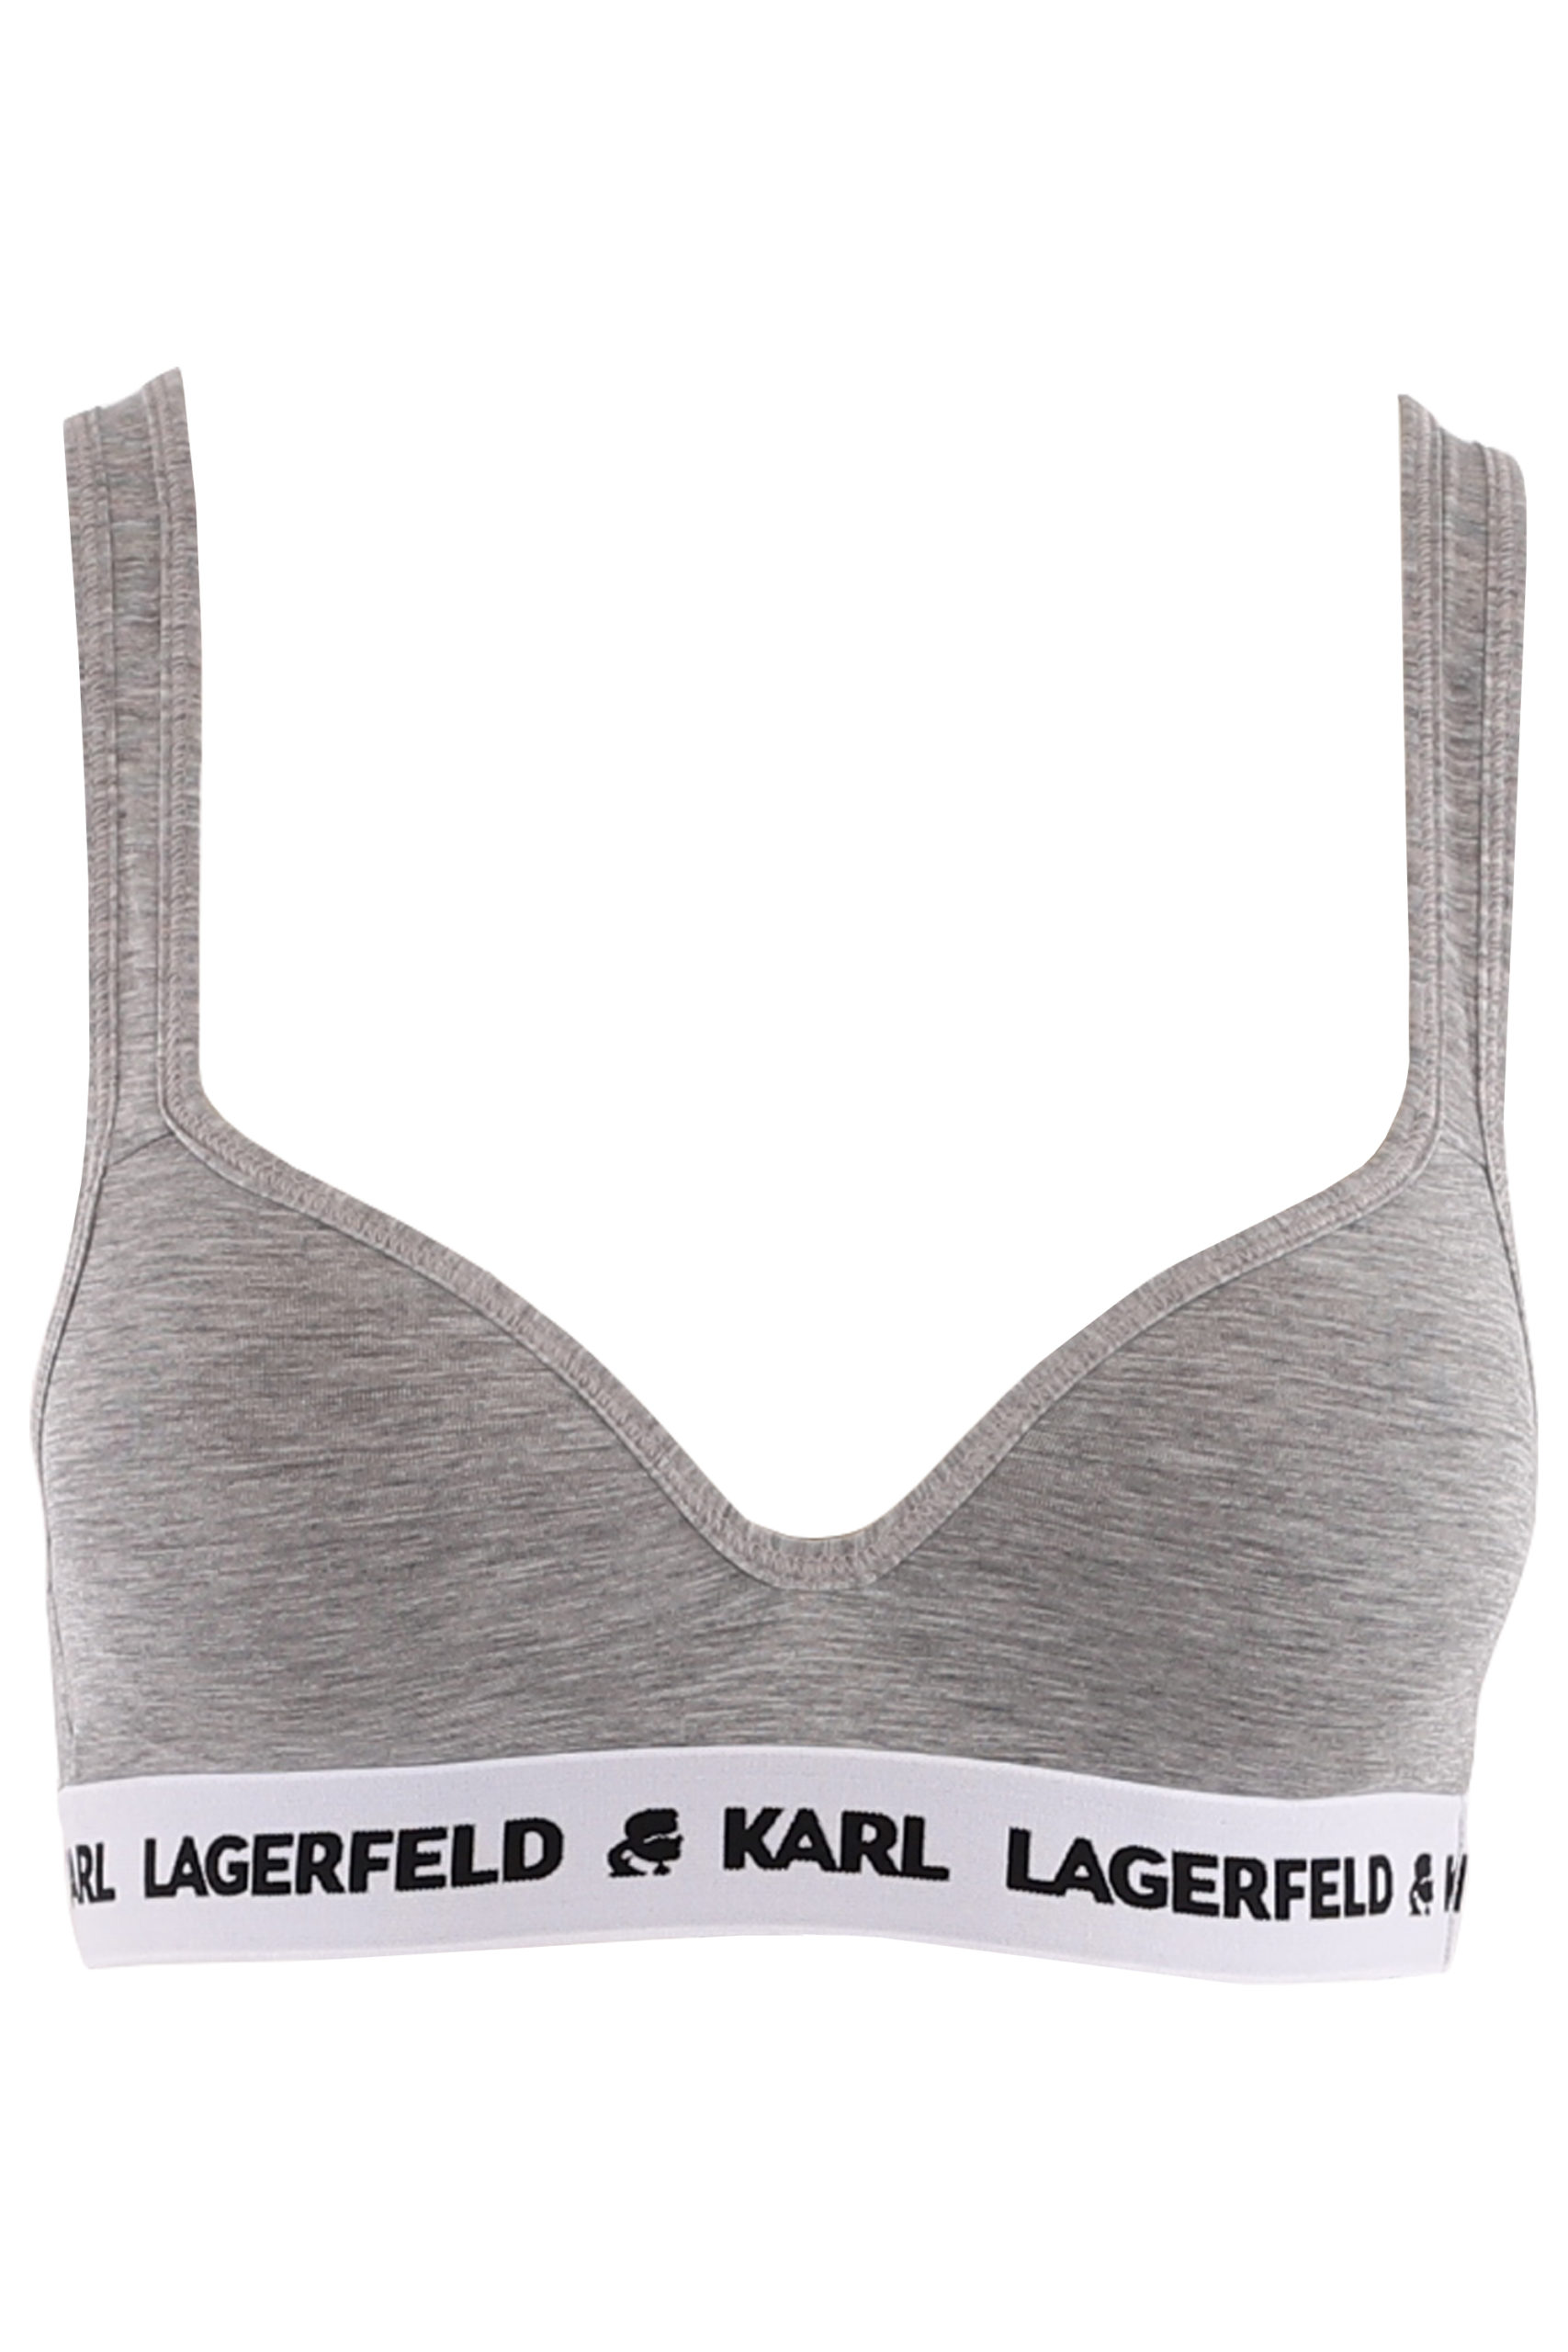 KARL LAGERFELD PADDED LOGO BRA, Light grey Women's Bra